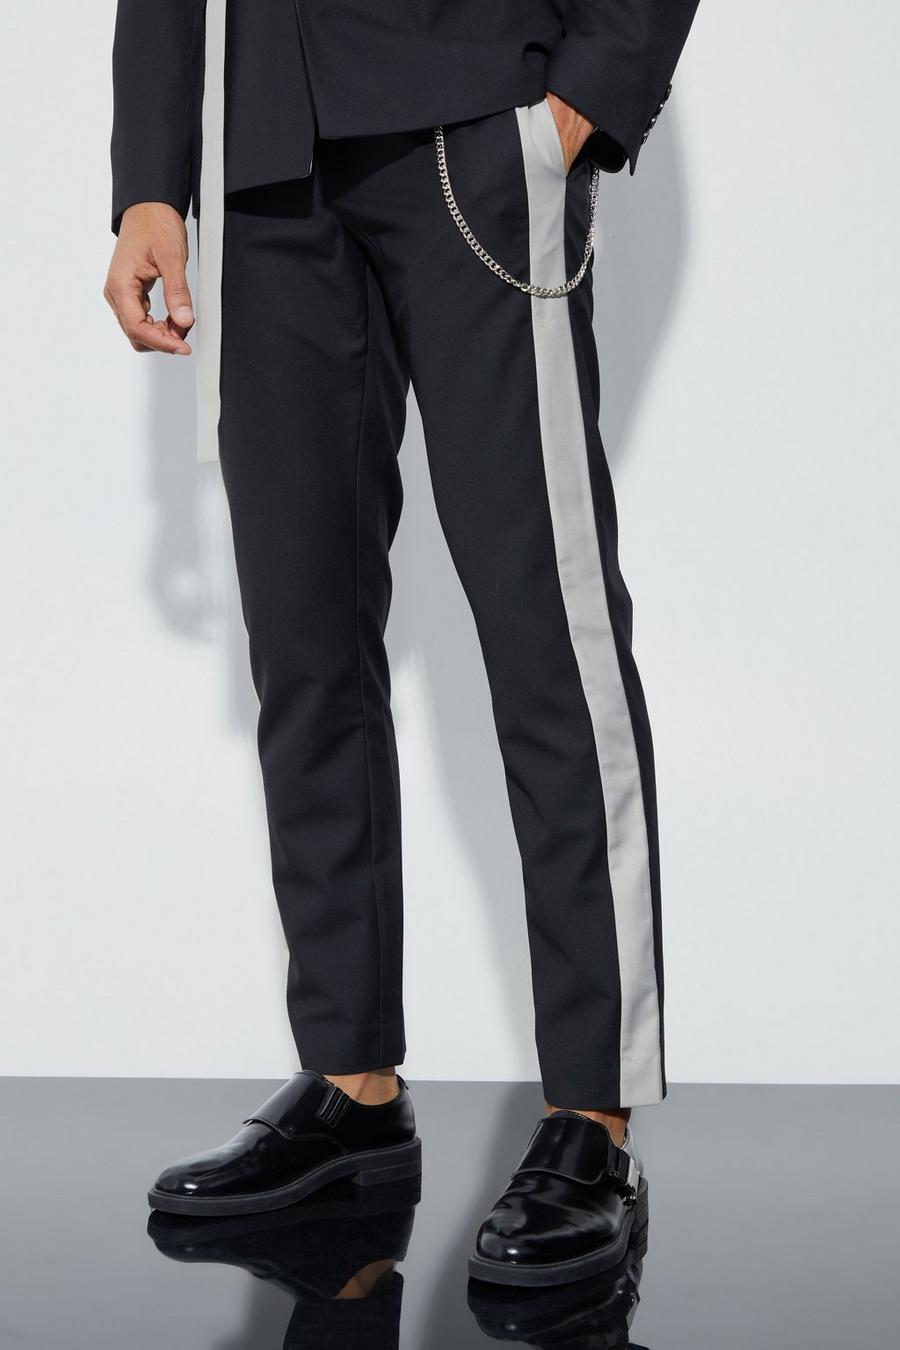 Black Slim Fit Color Block Pants With Chain